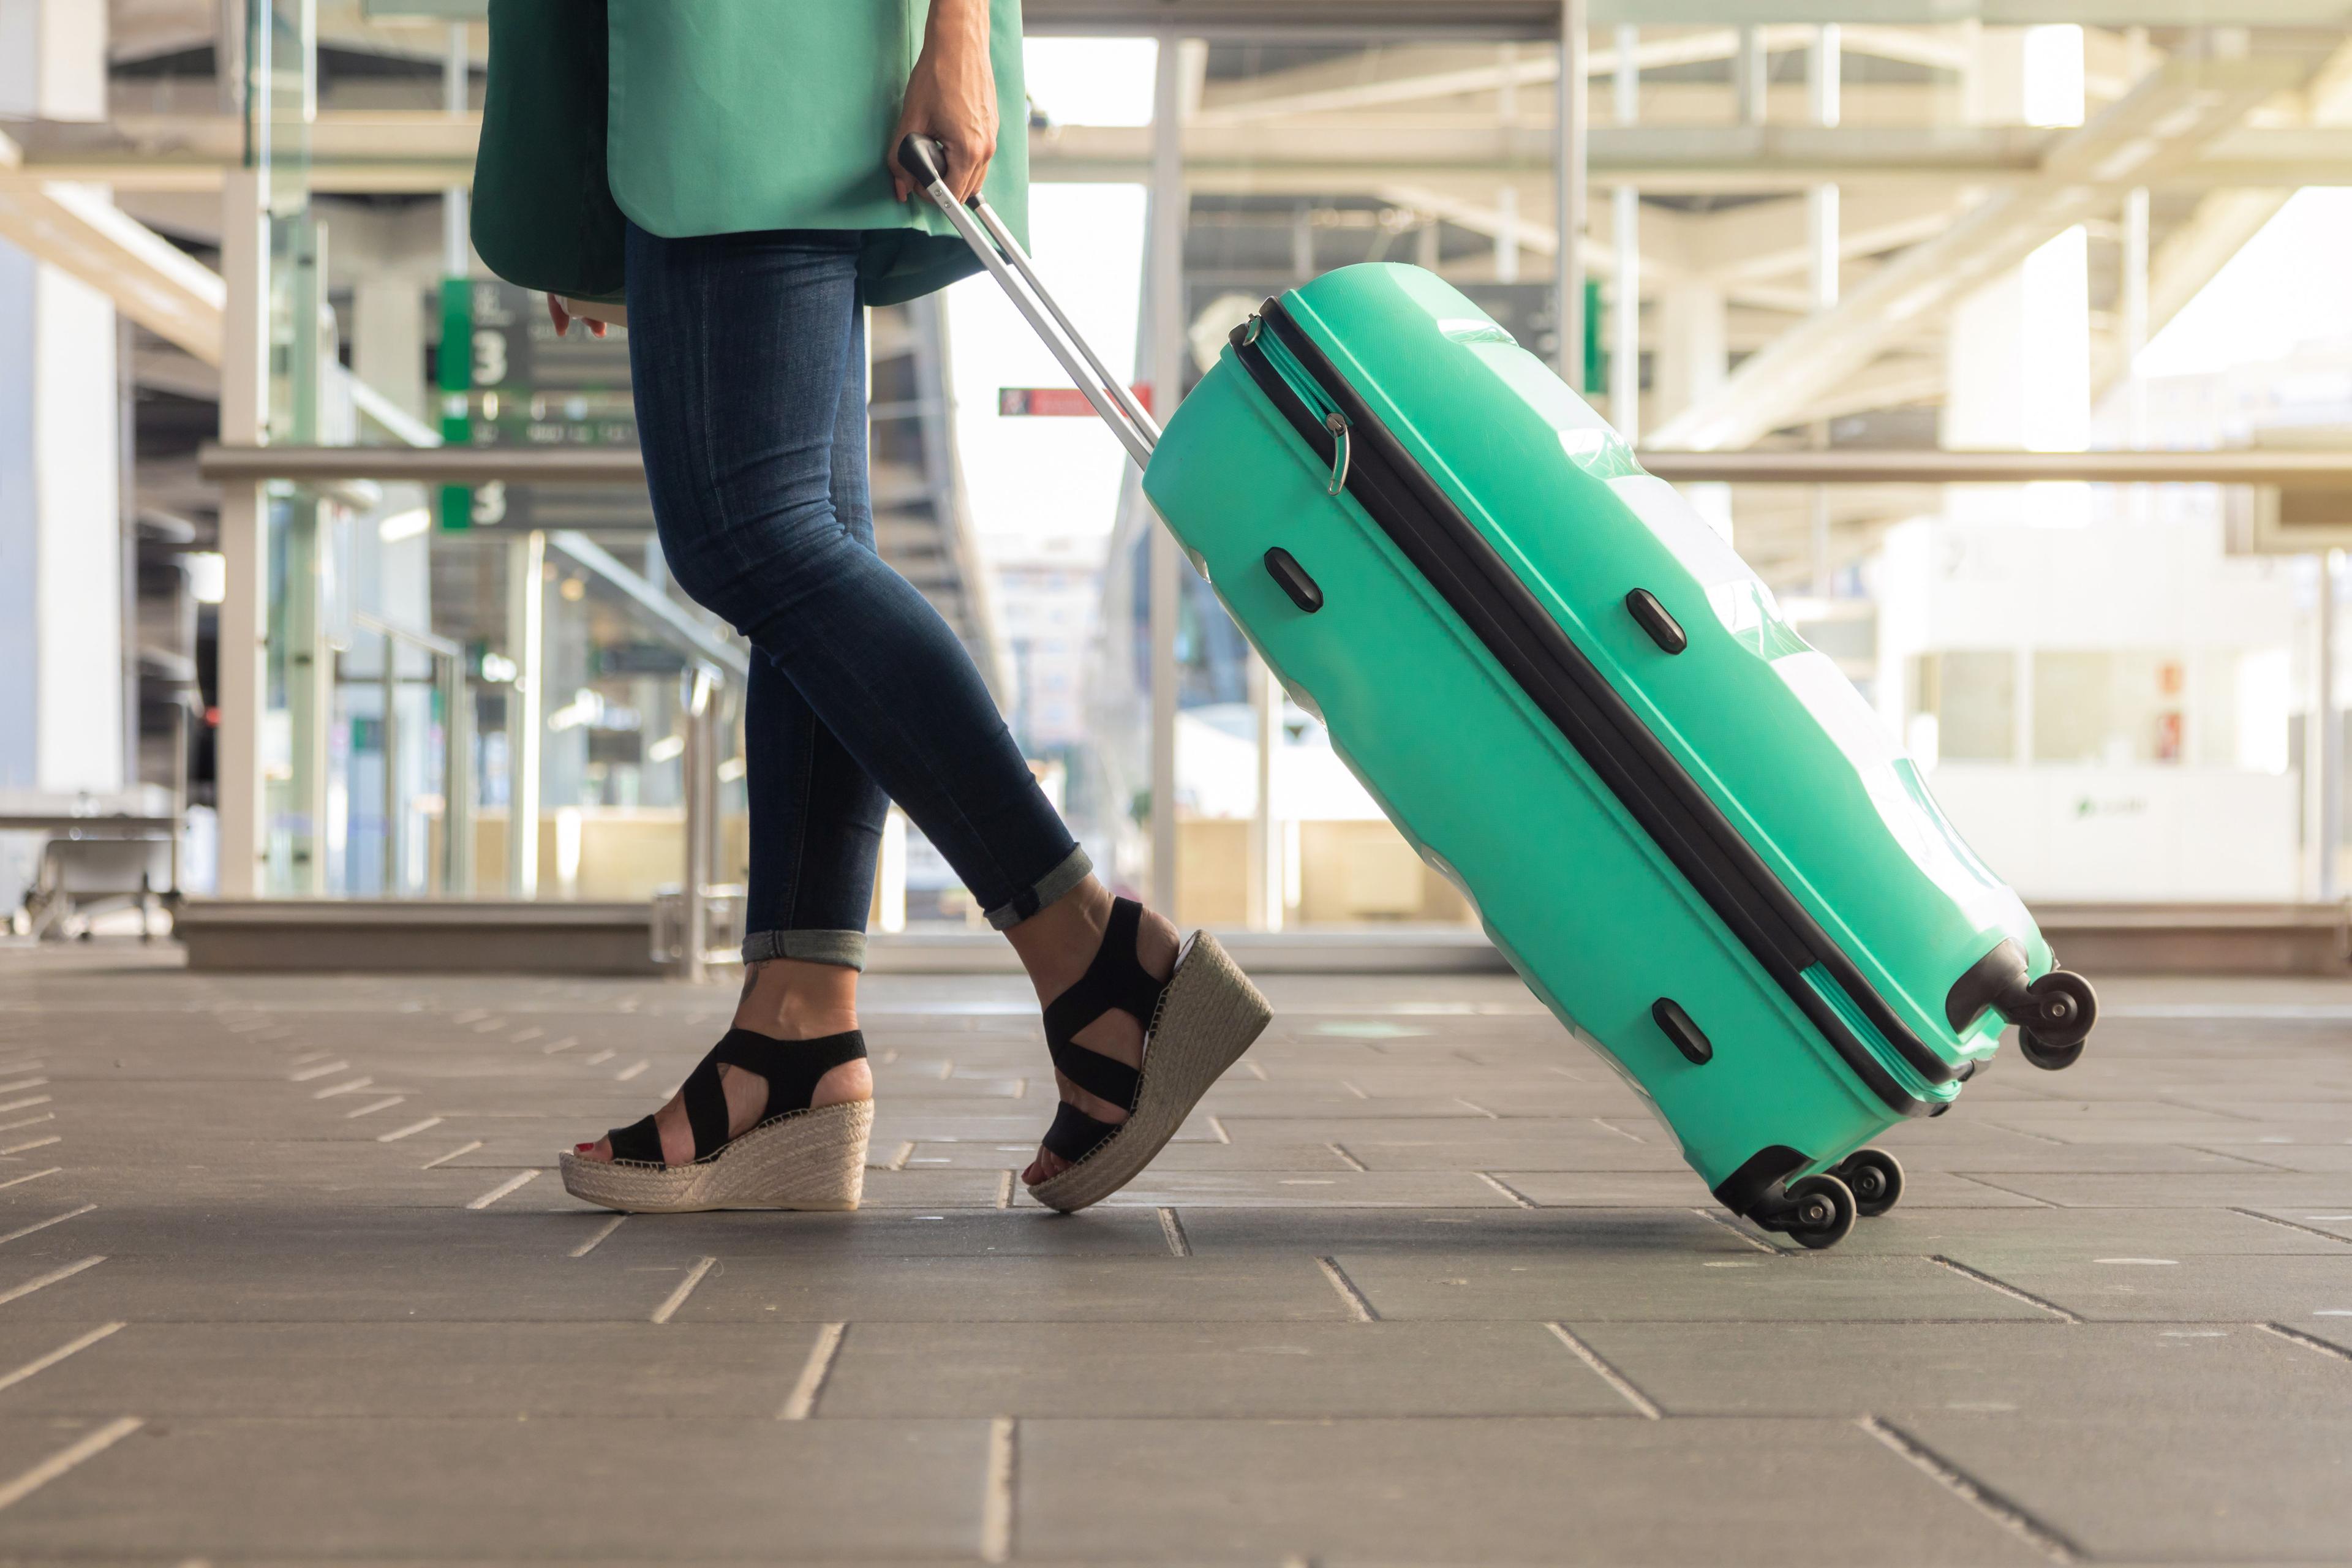 The Lost Luggage Saga Of Summer 2022